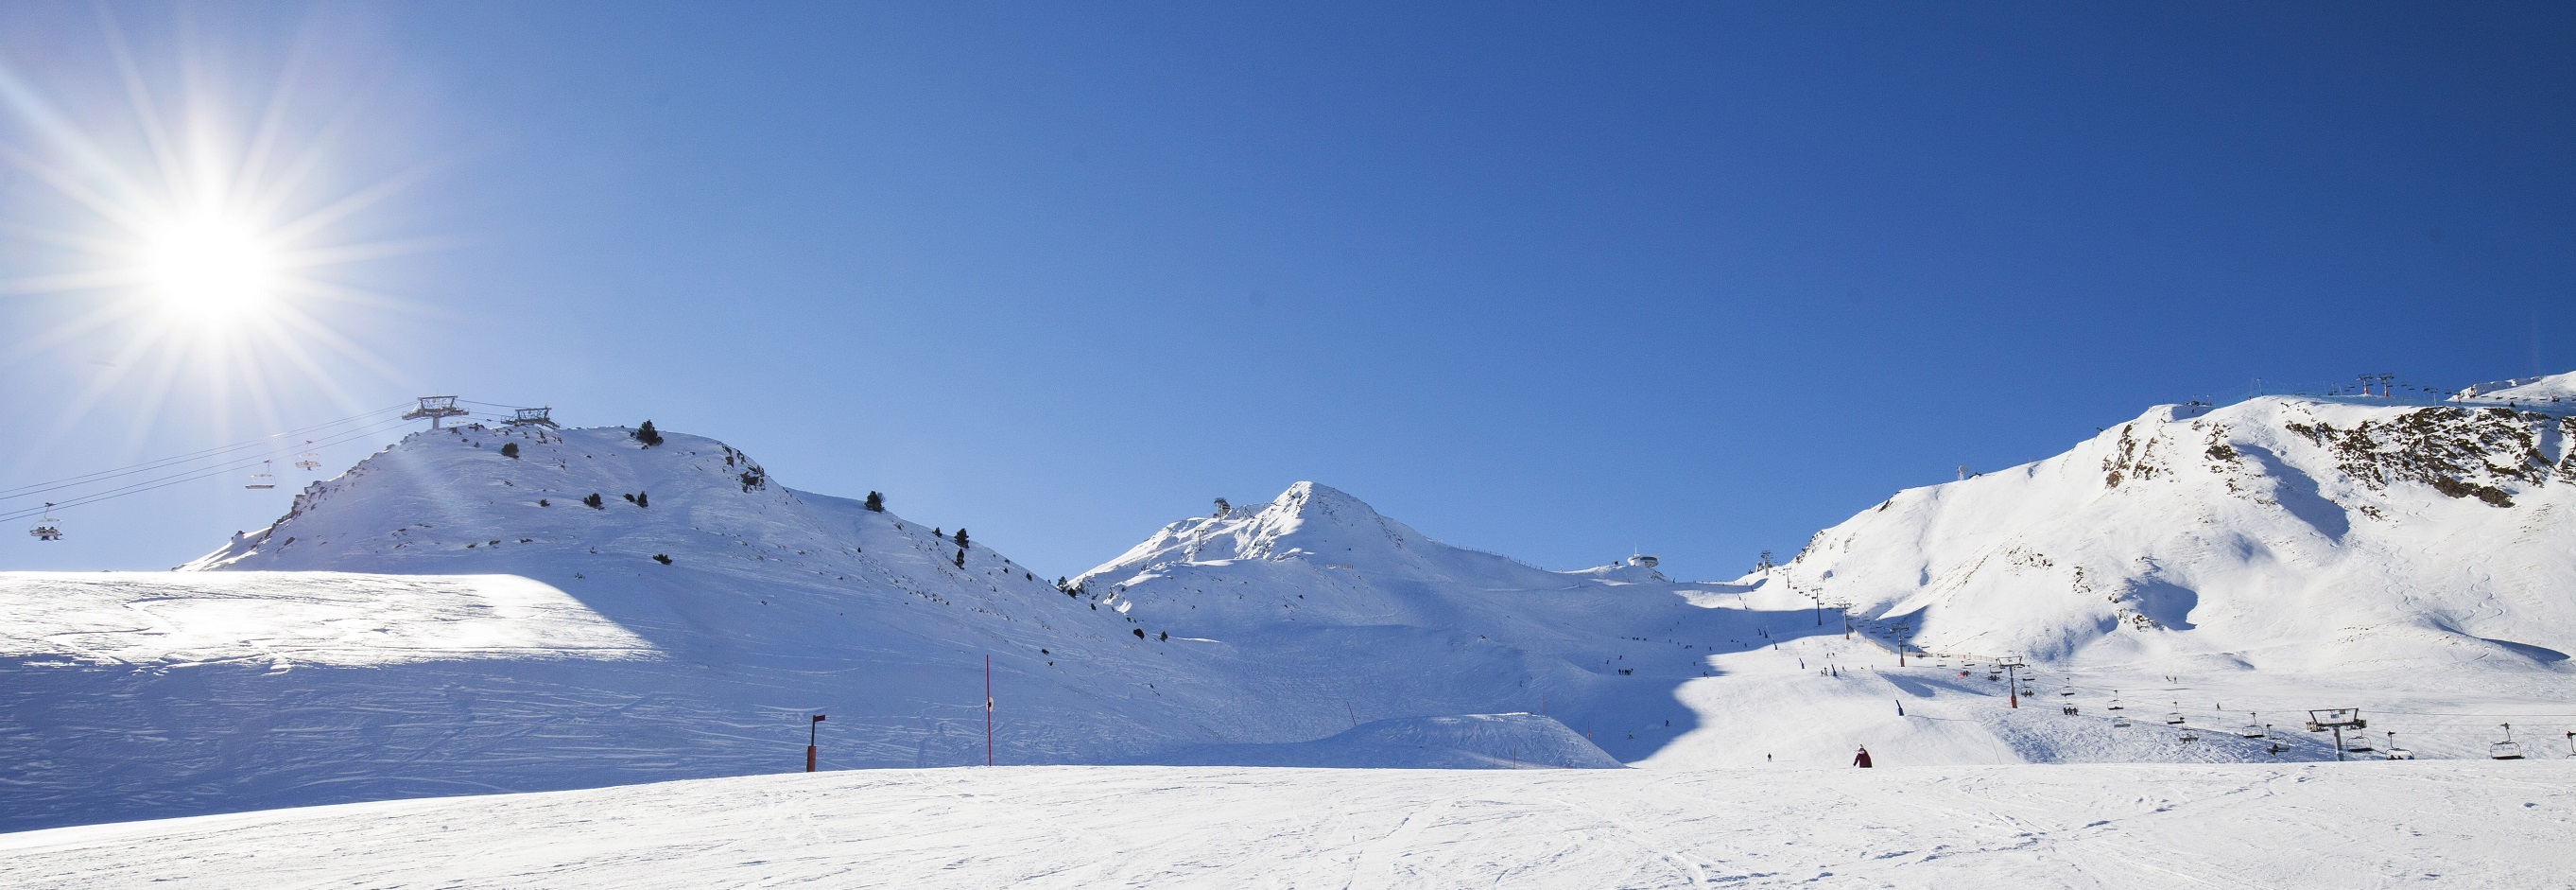 andorra school educational ski trips